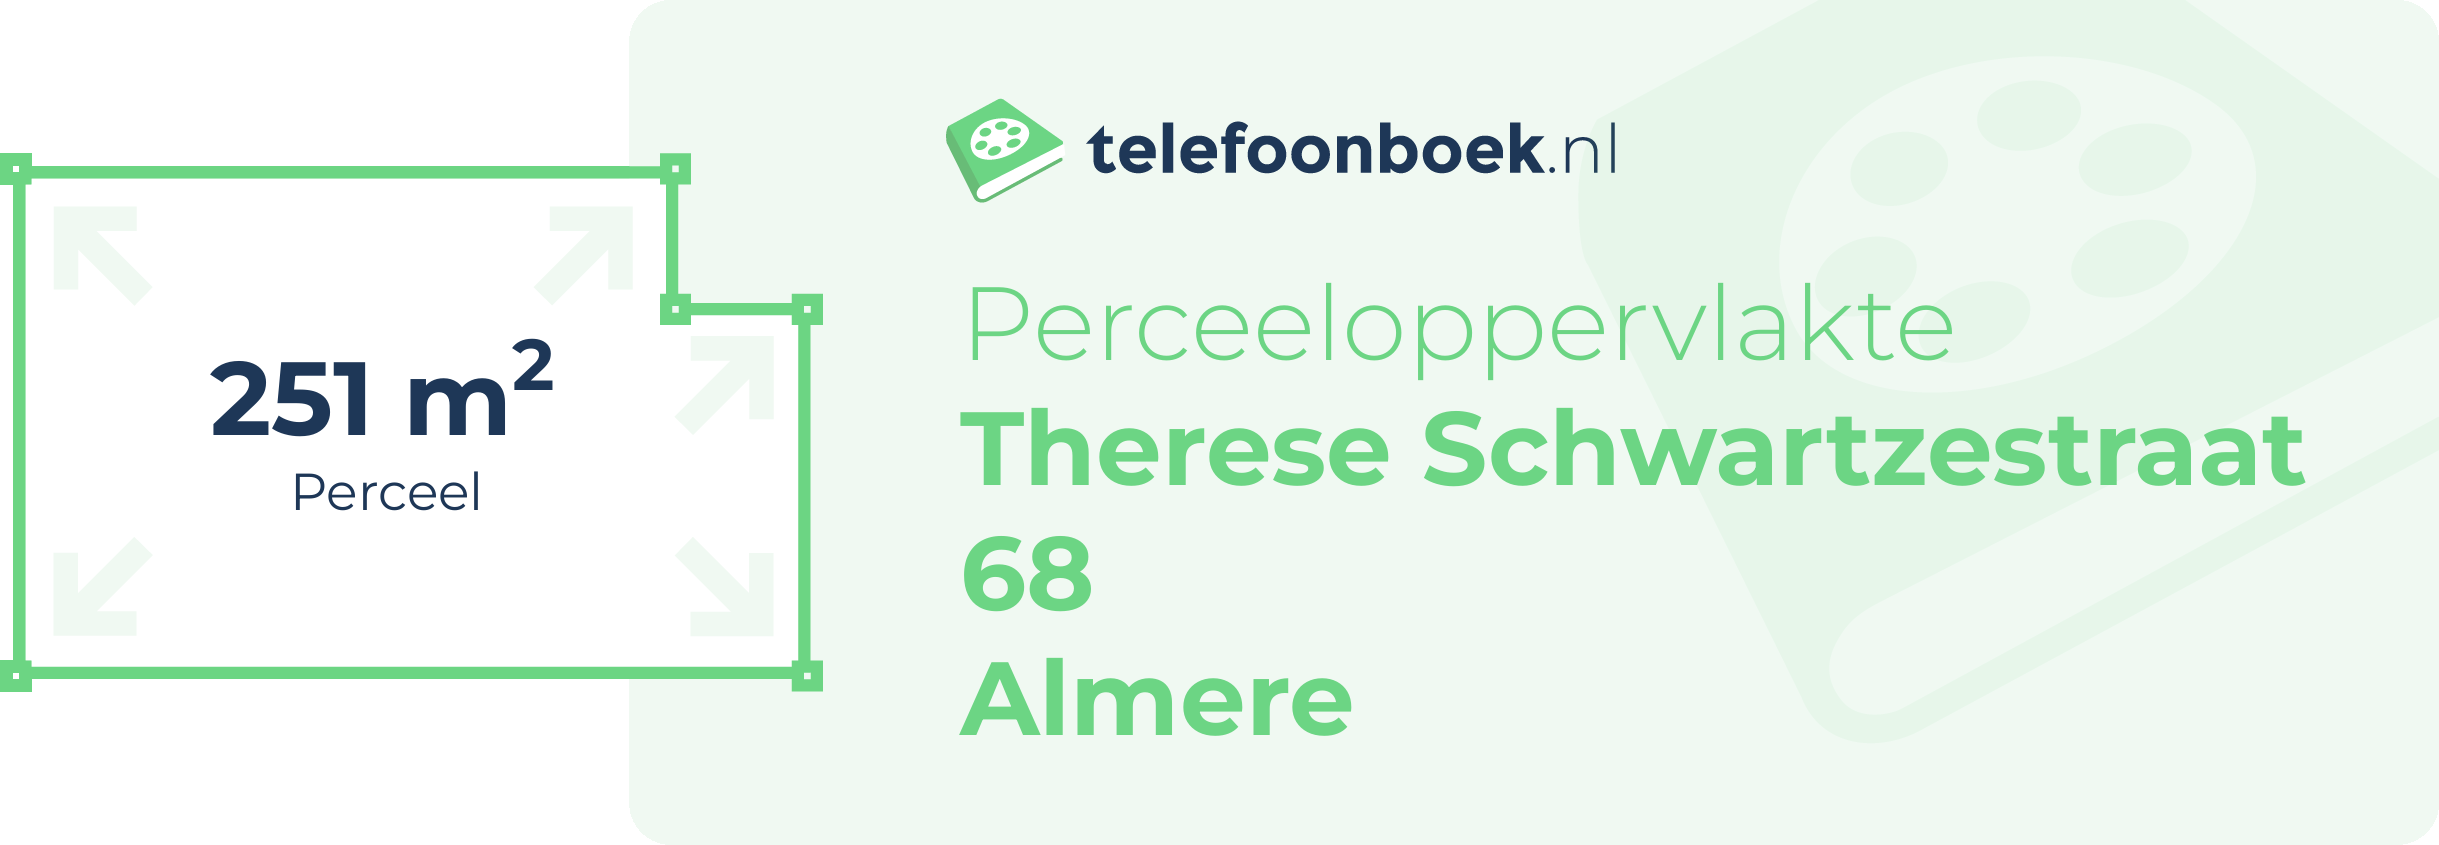 Perceeloppervlakte Therese Schwartzestraat 68 Almere